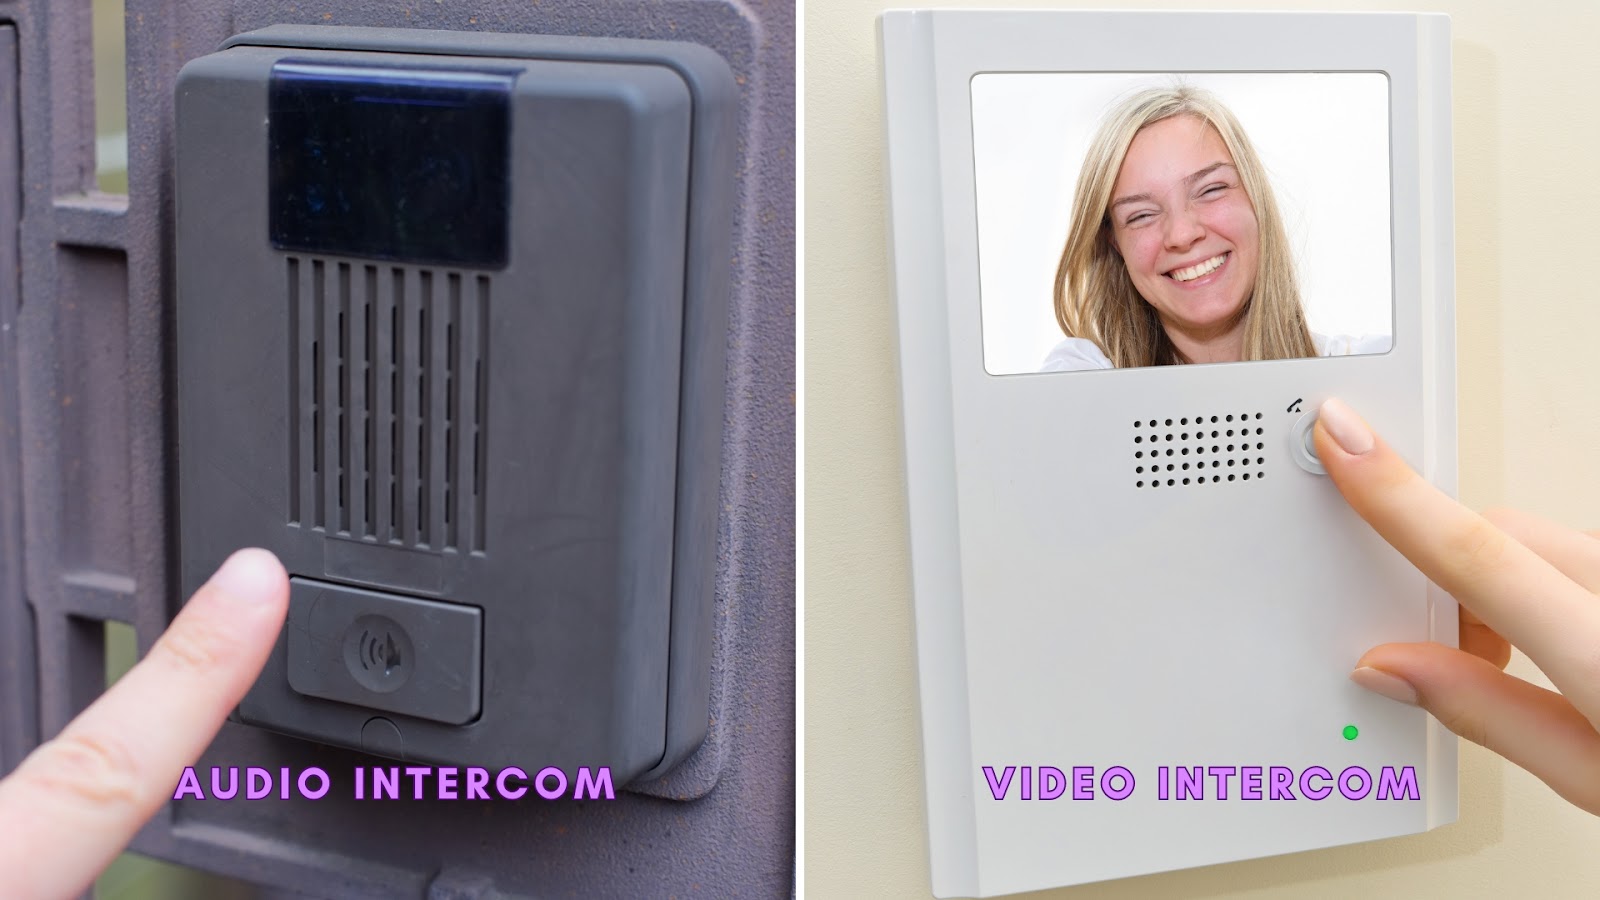 An audio intercom versus a video intercom